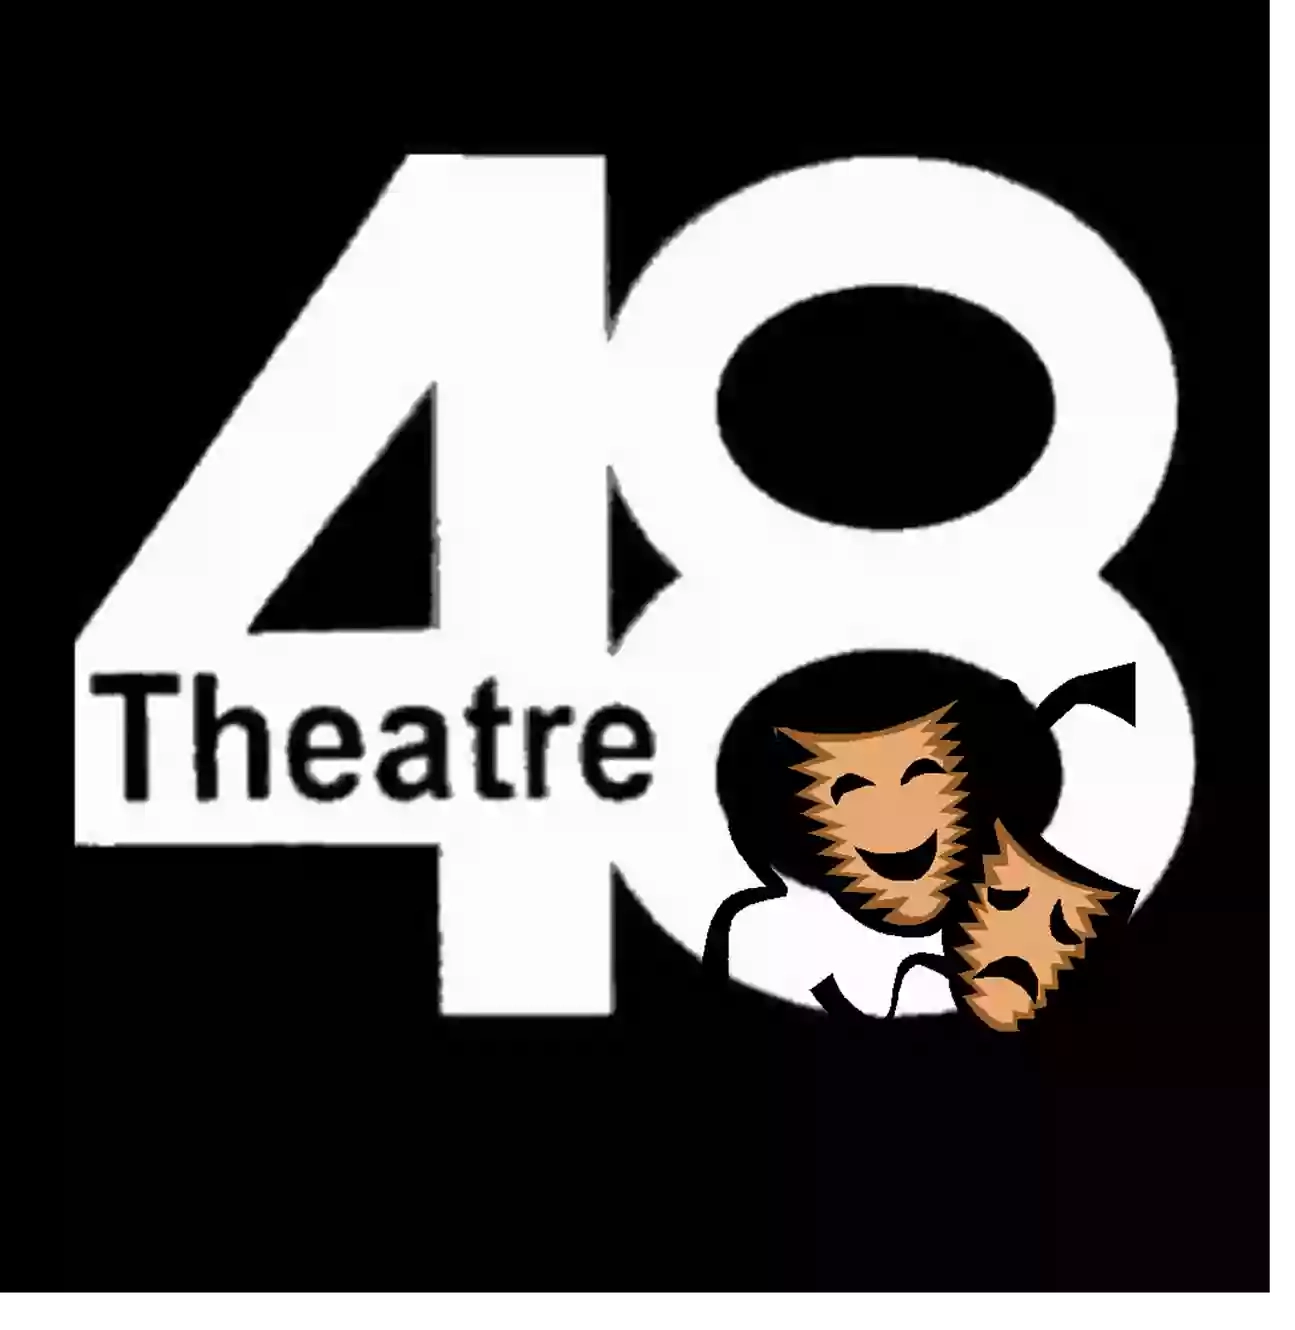 Theatre 48